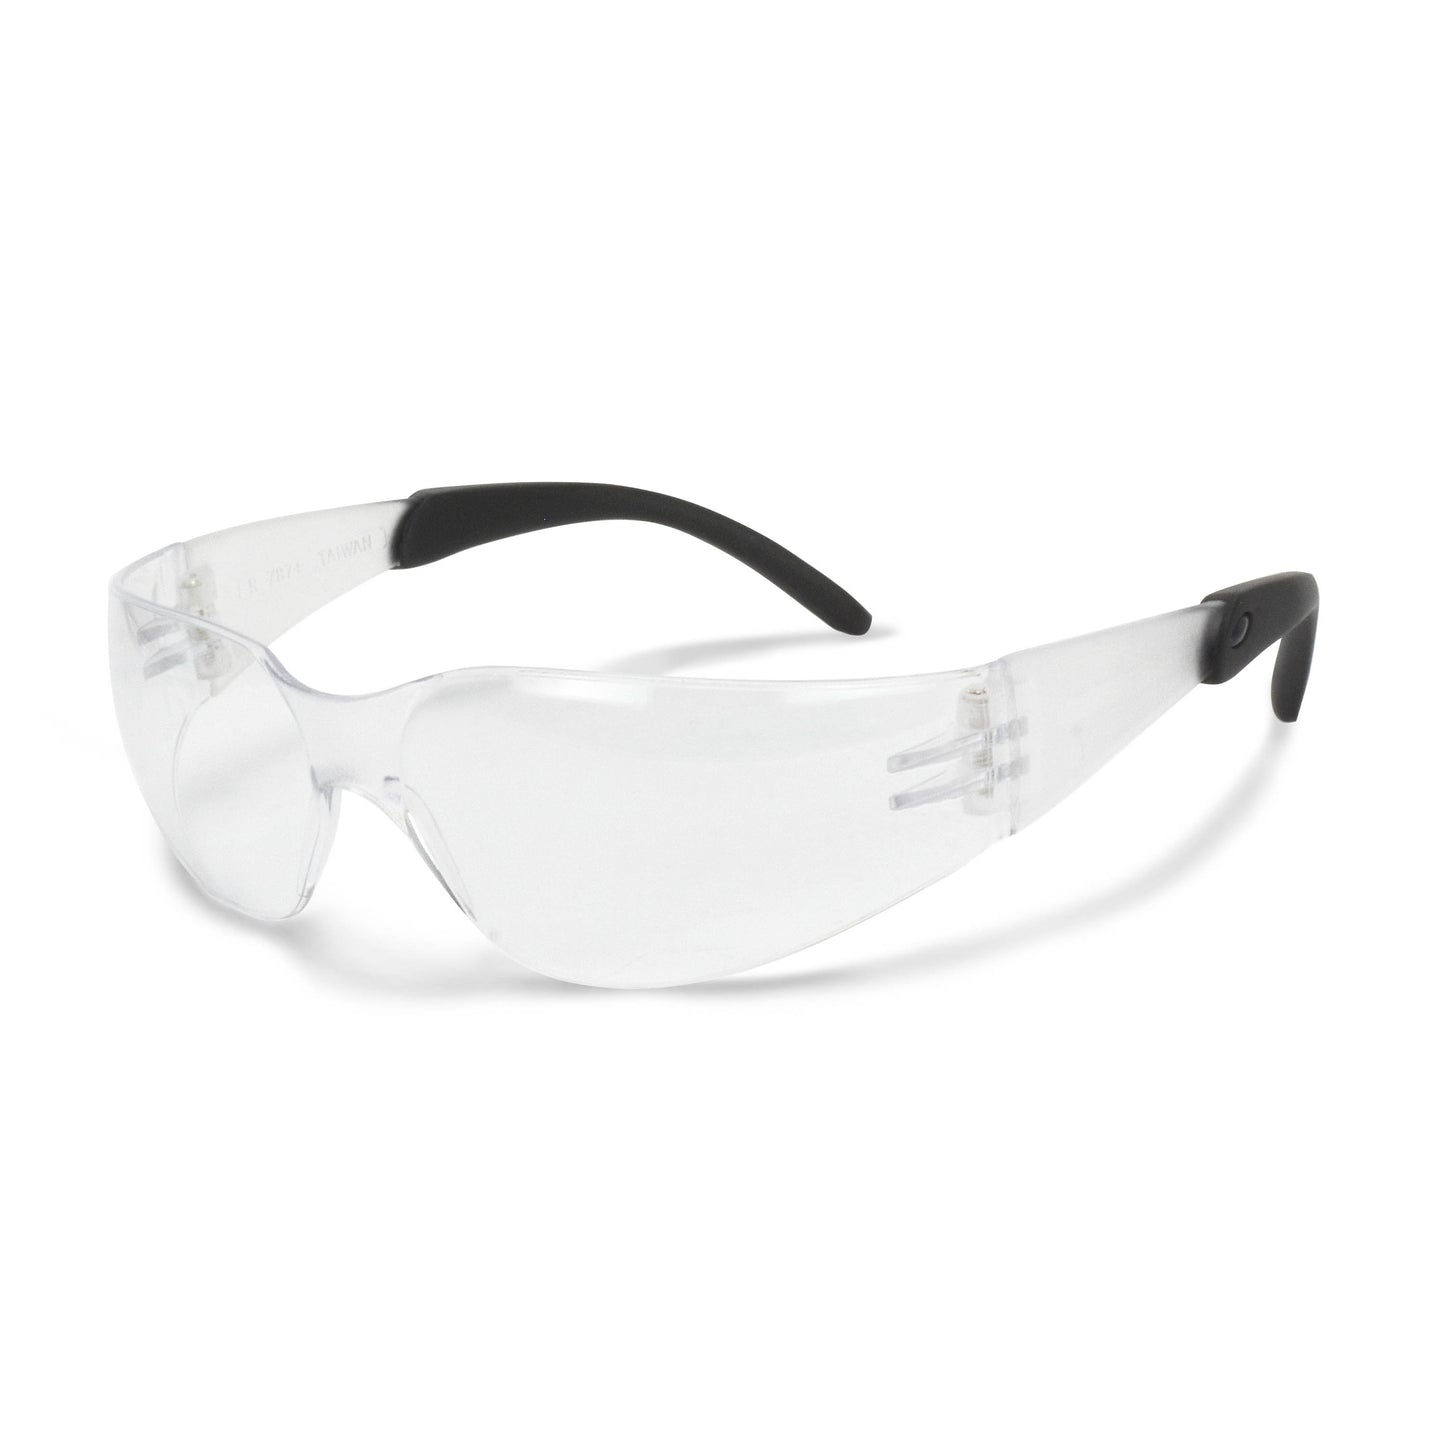 Radians Mirage RT Safety Eyewear